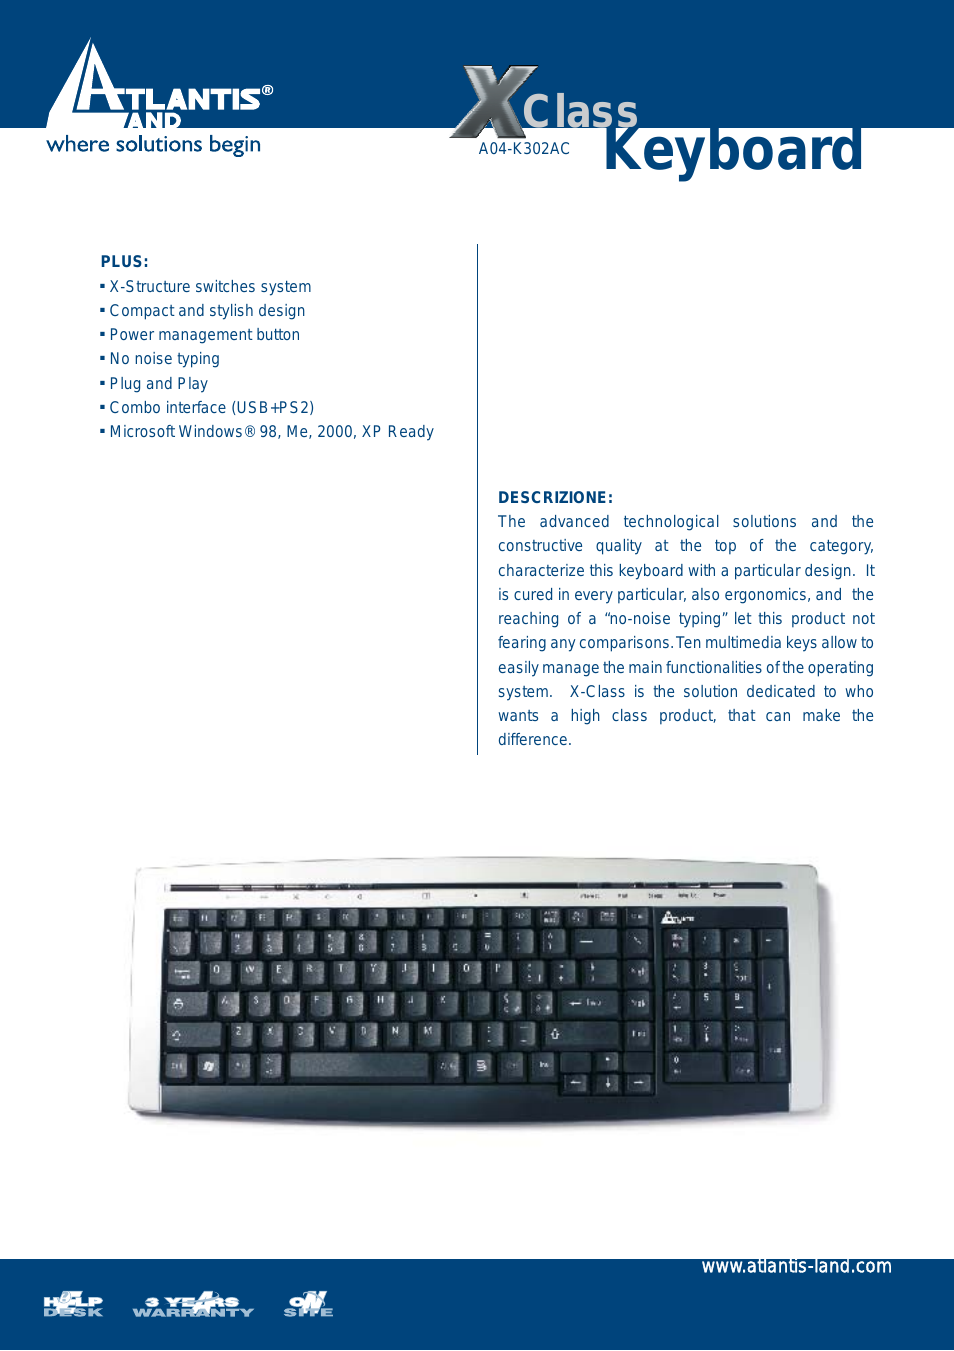 XClass Keyboard A04-K302AC